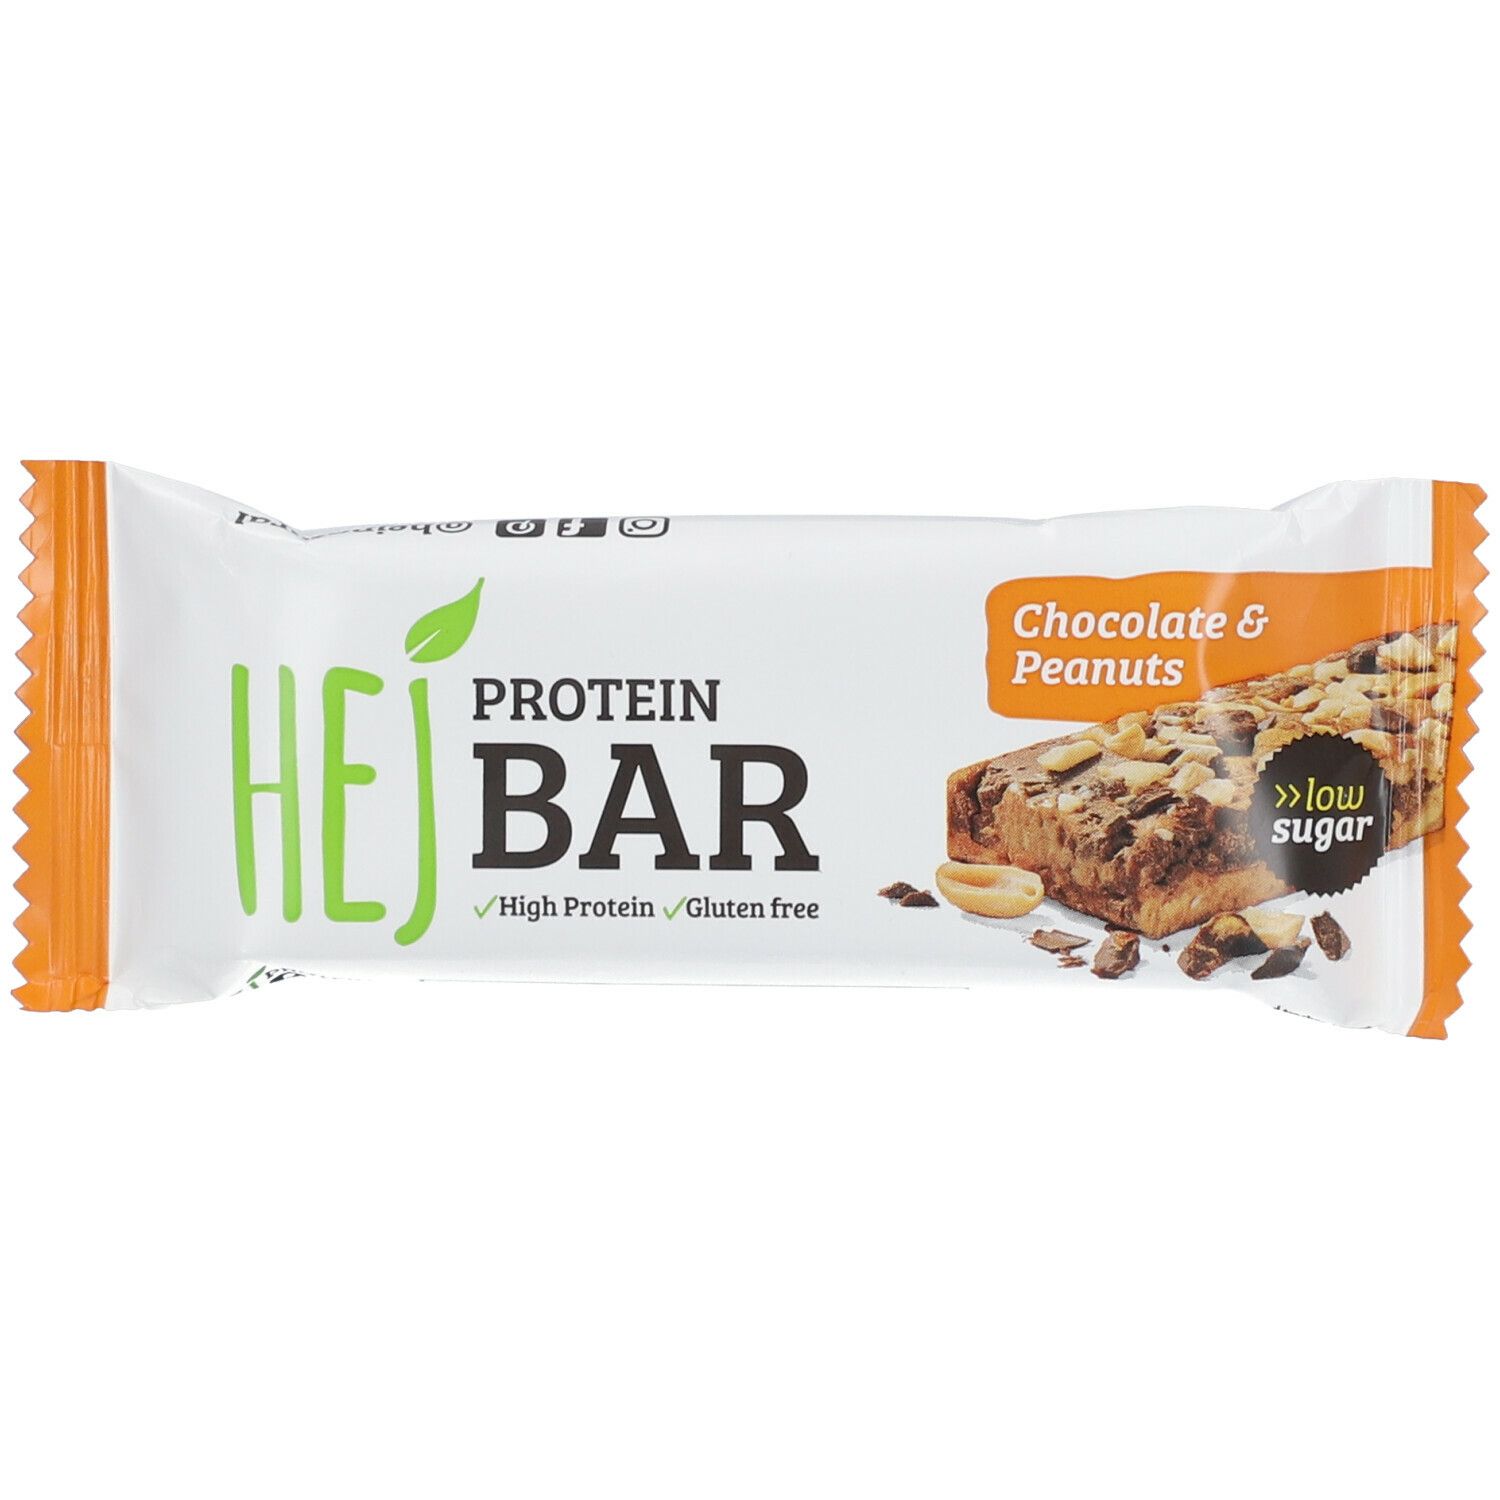 Image of Hejbar Chocolate & Peanuts